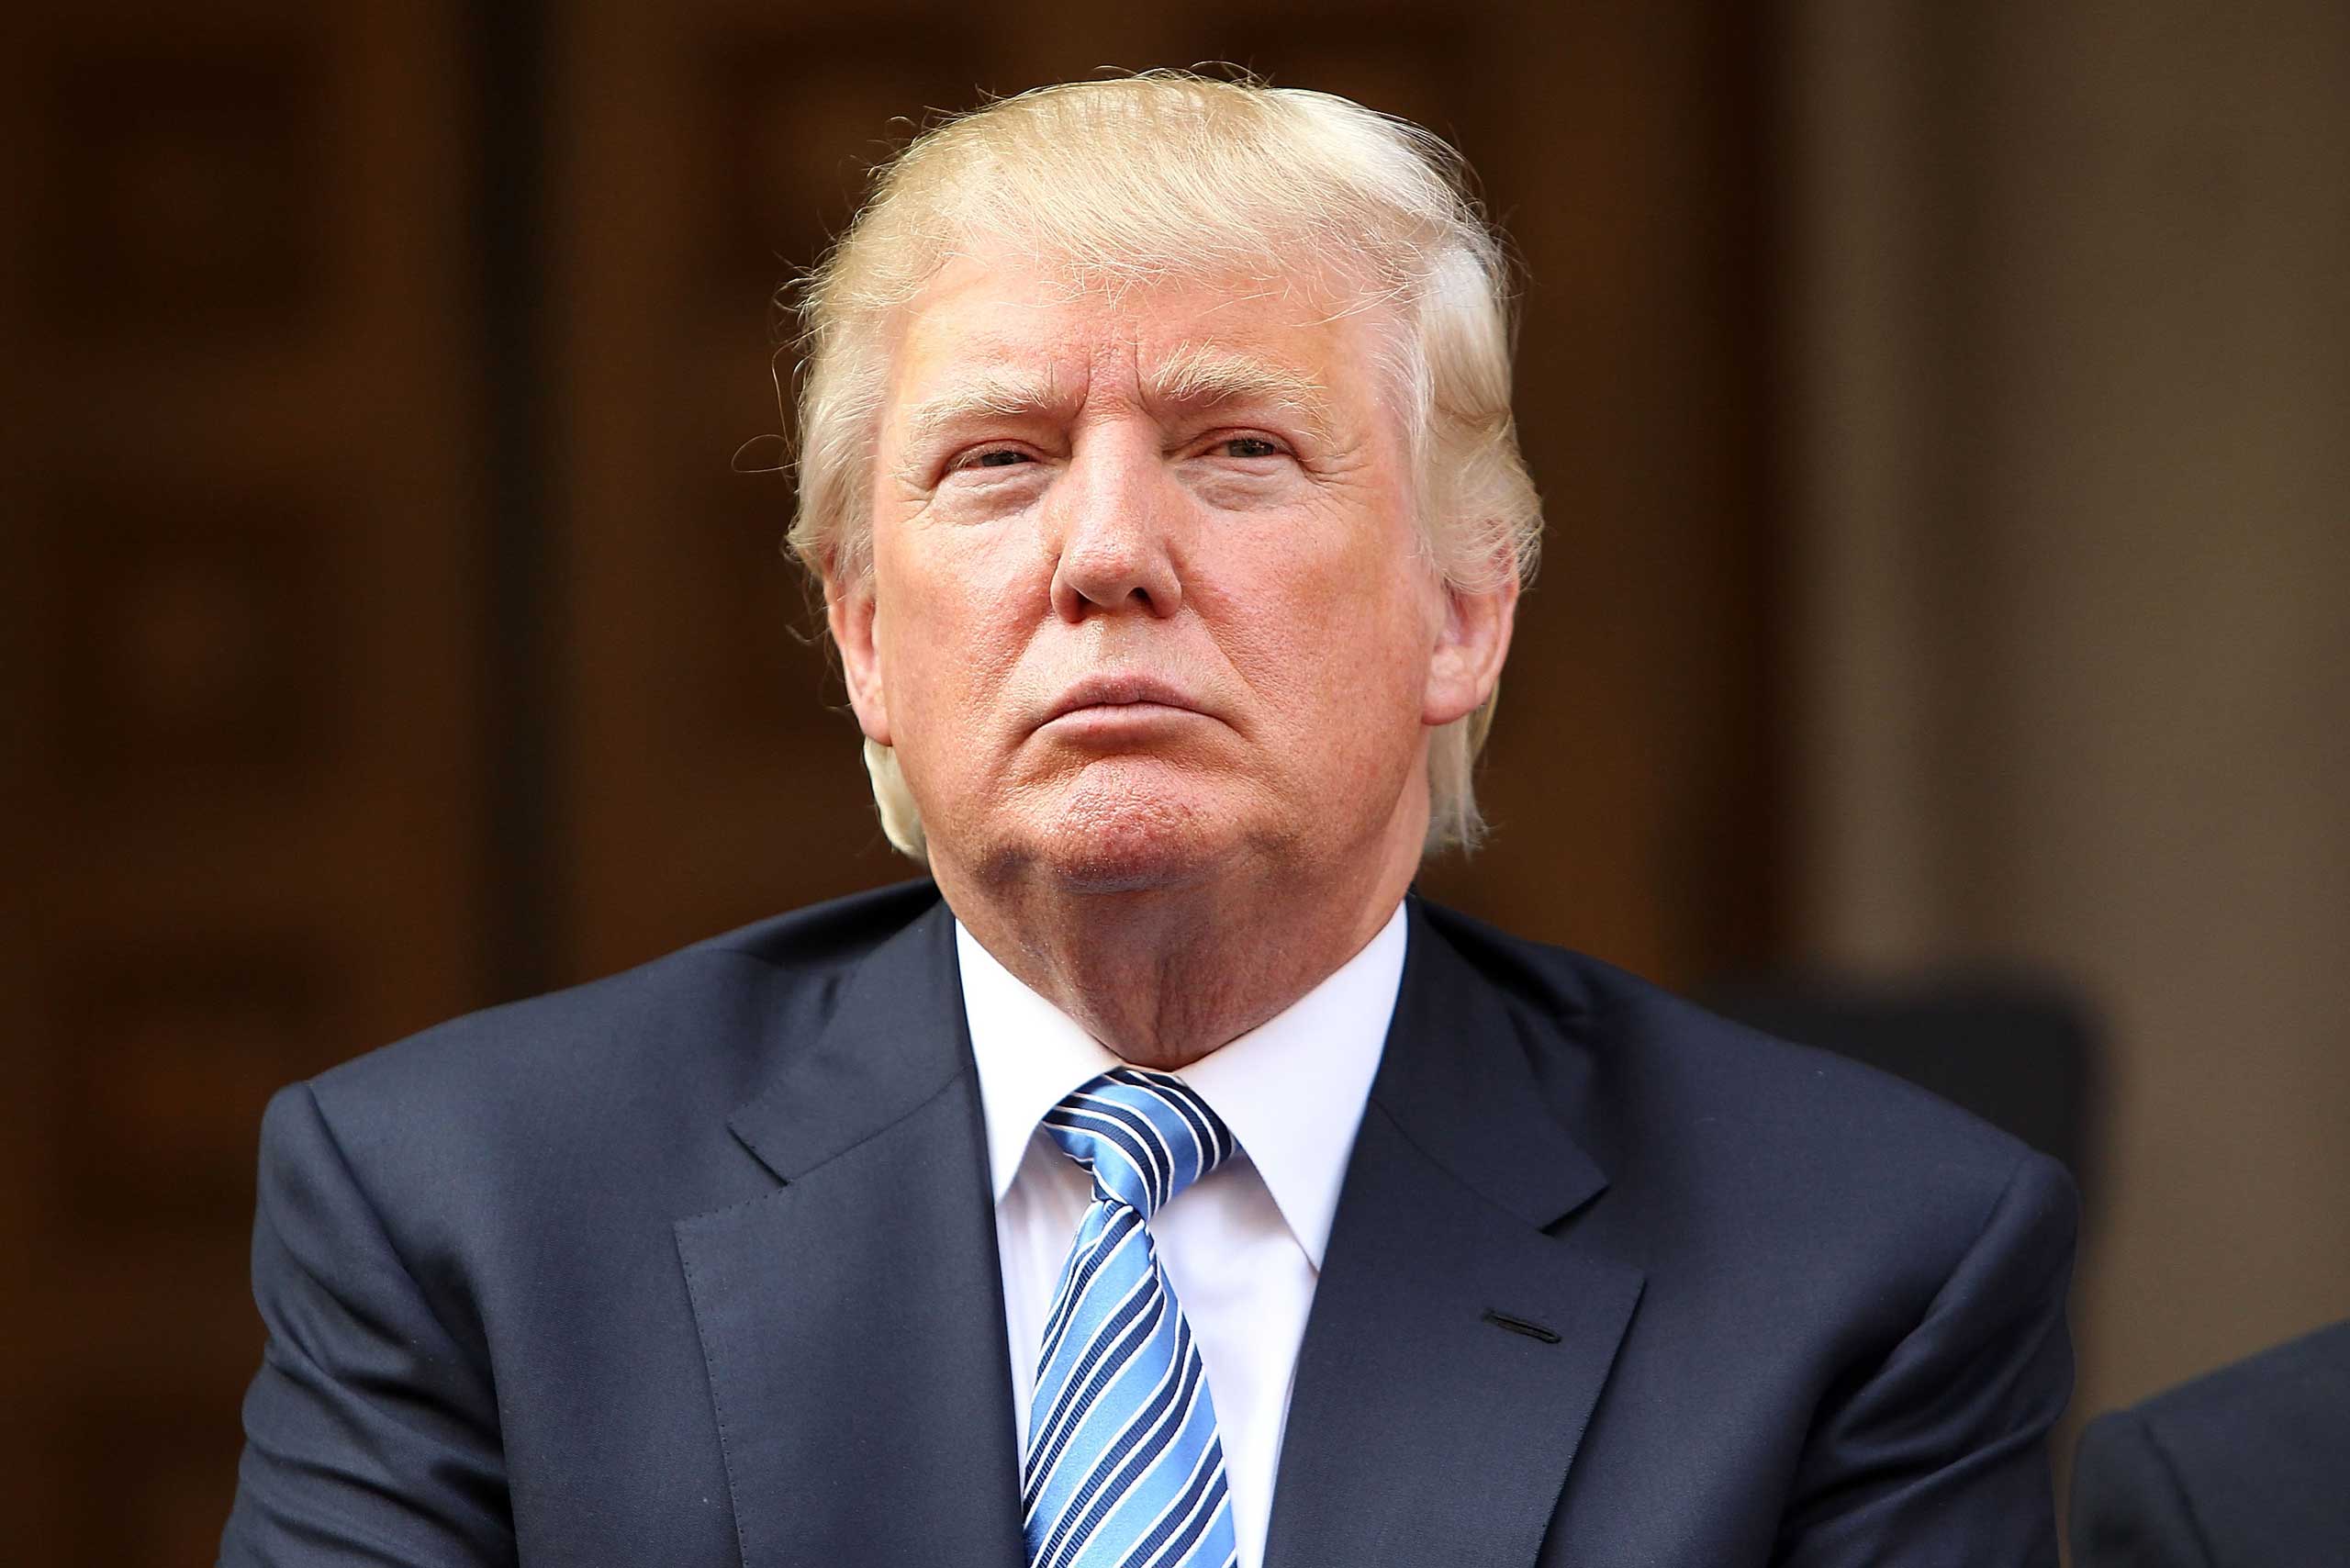 Donald Trump in 2014. (Paul Morigi—WireImage/Getty Images)